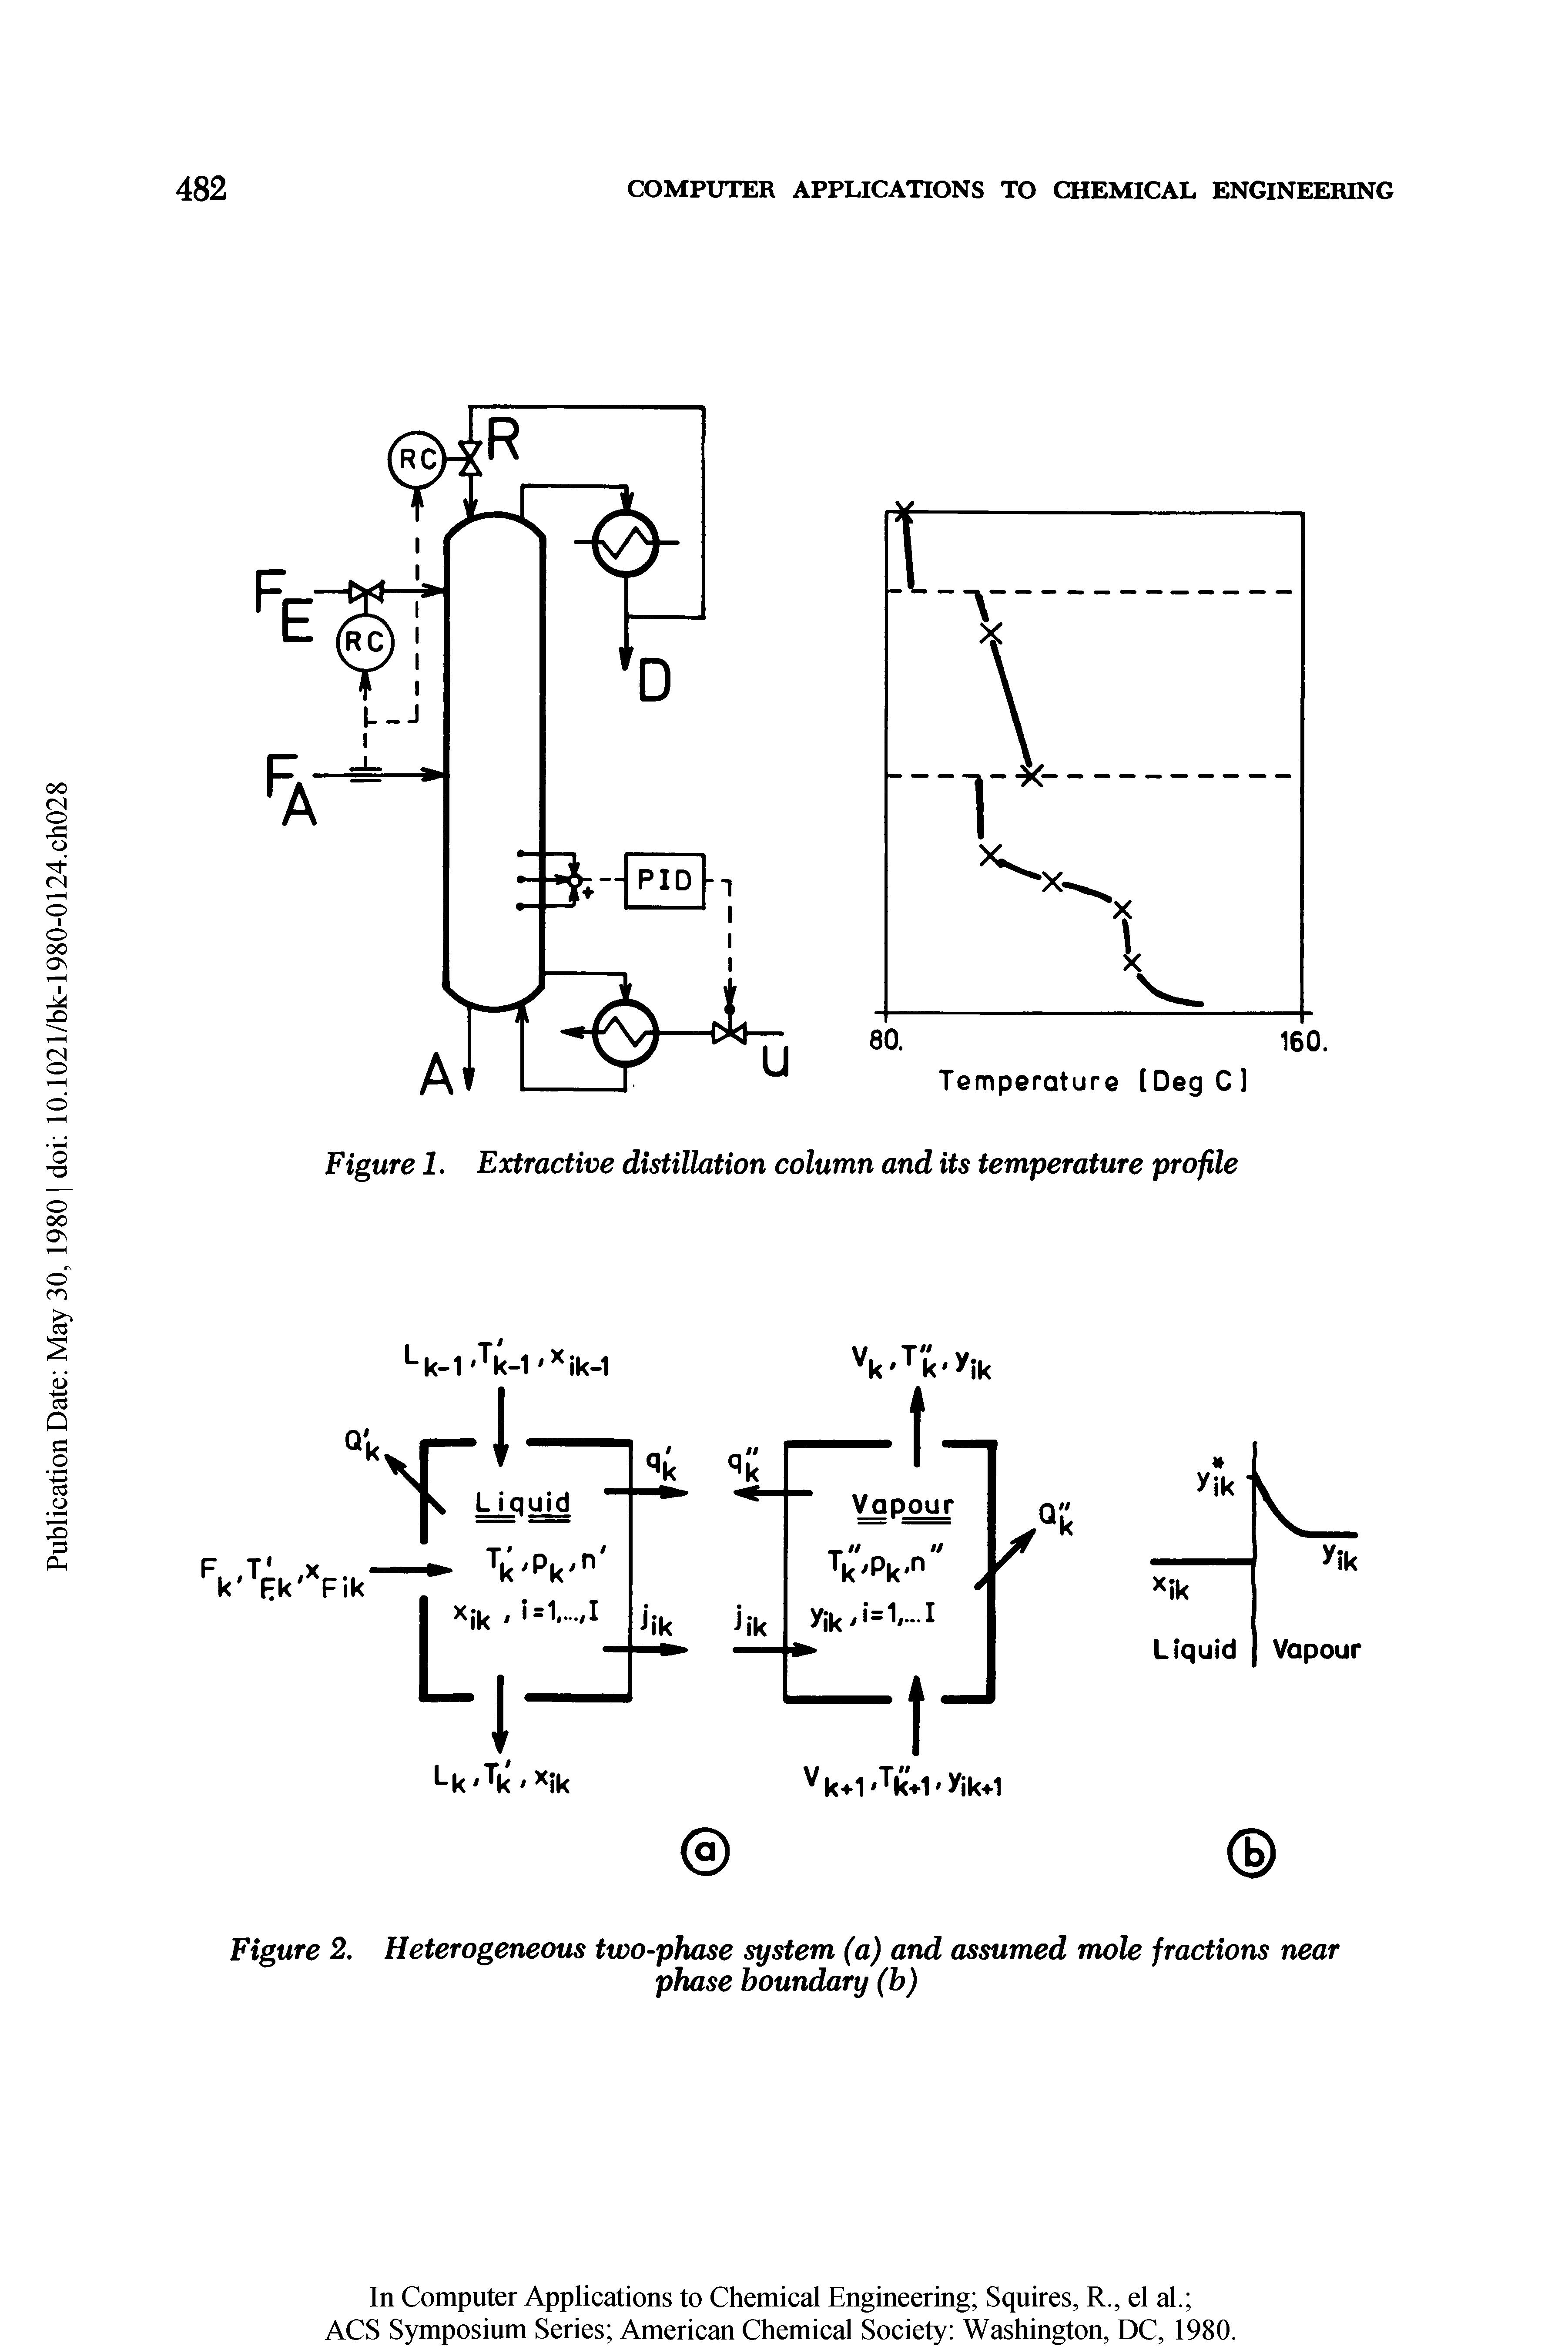 Figure 1. Extractive distillation column and its temperature profile...